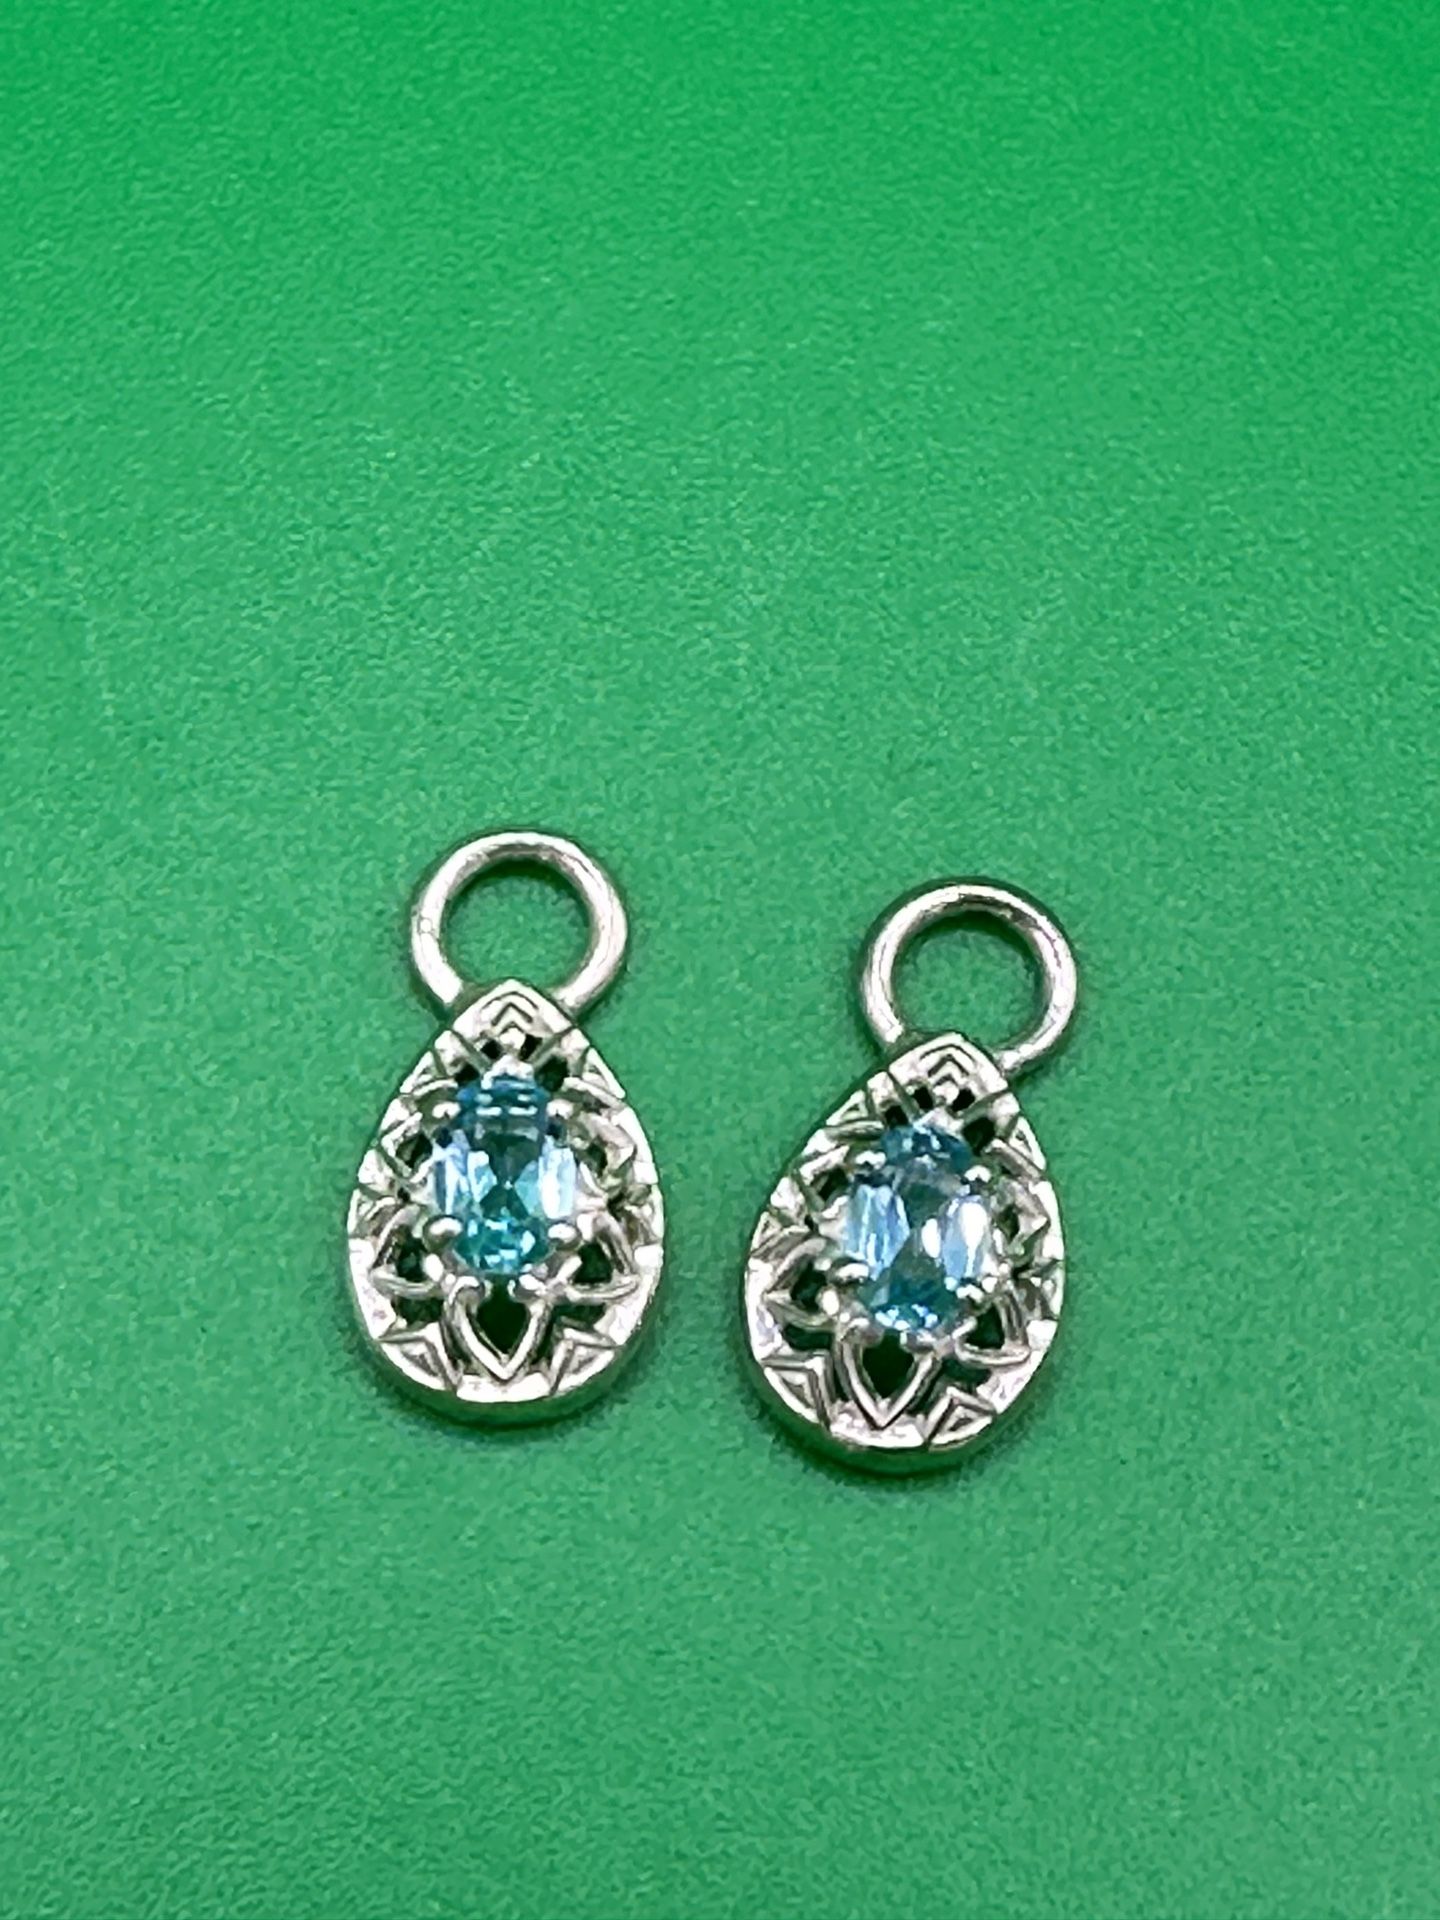 Blue Topaz Sterling Silver Pendants/Earrings 925 1” Long 2.54 Grams Great Condition 